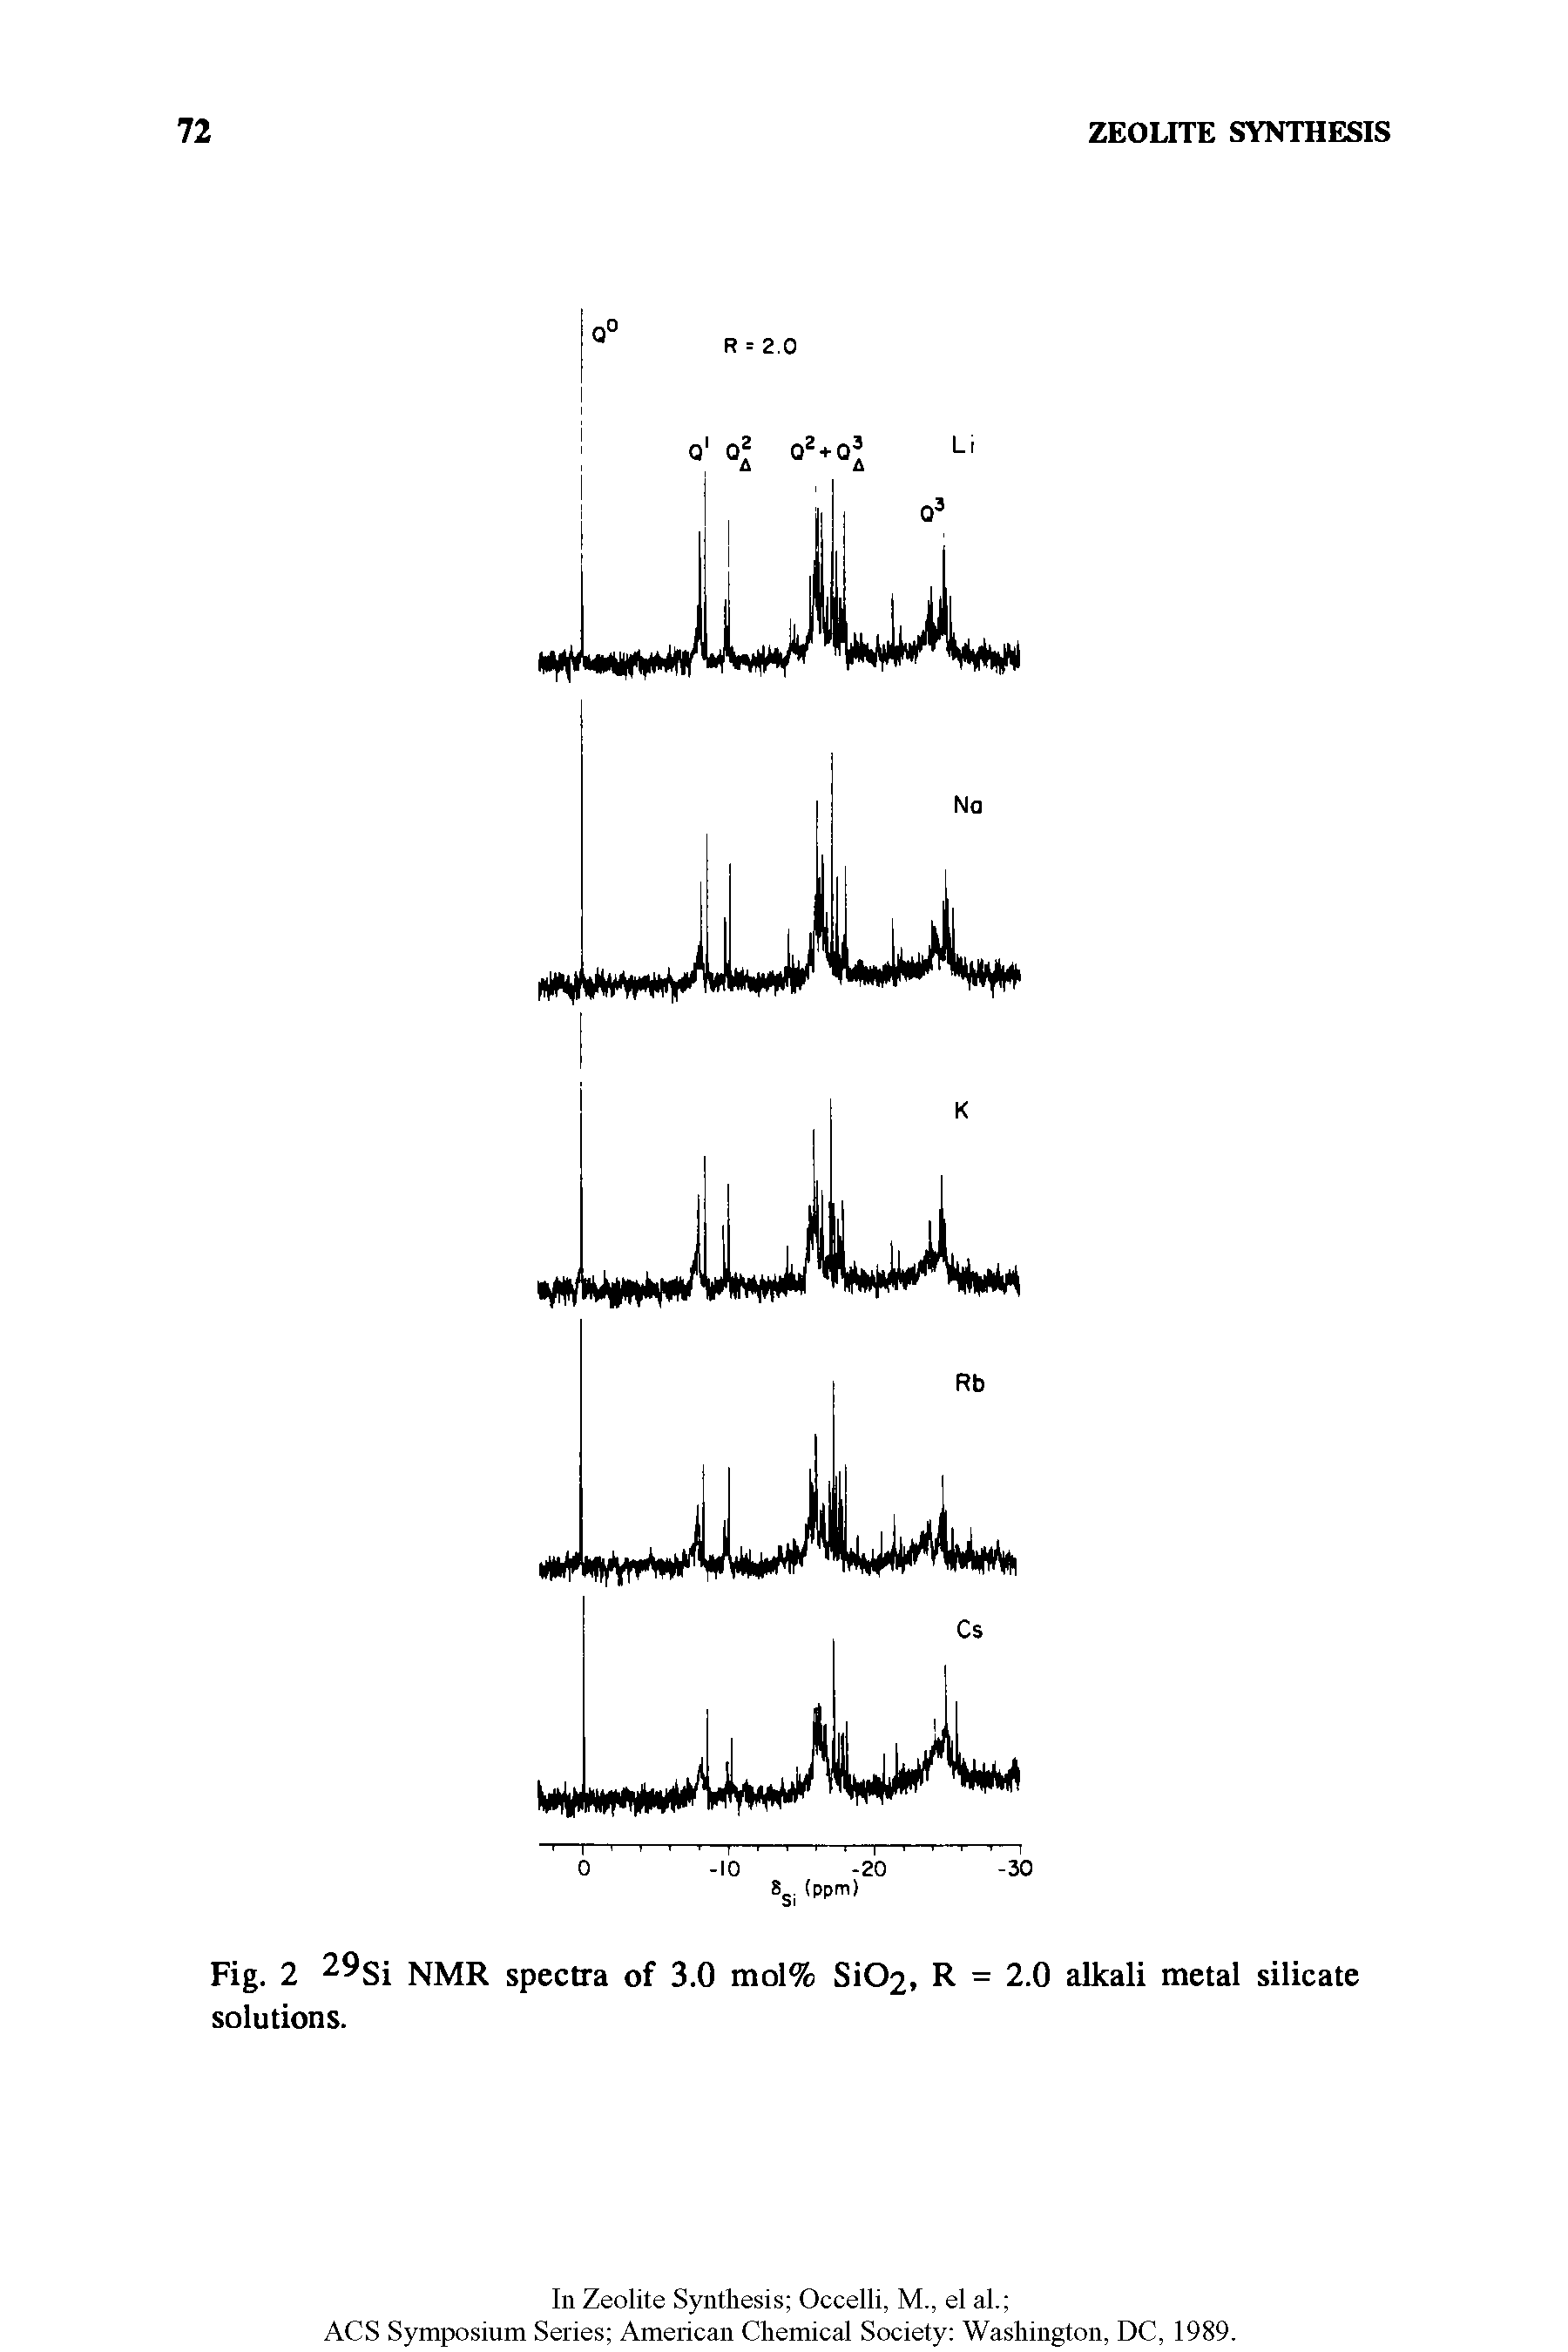 Fig. 2 29gj NMR spectra of 3.0 mol% SiC>2, R = 2.0 alkali metal silicate solutions.